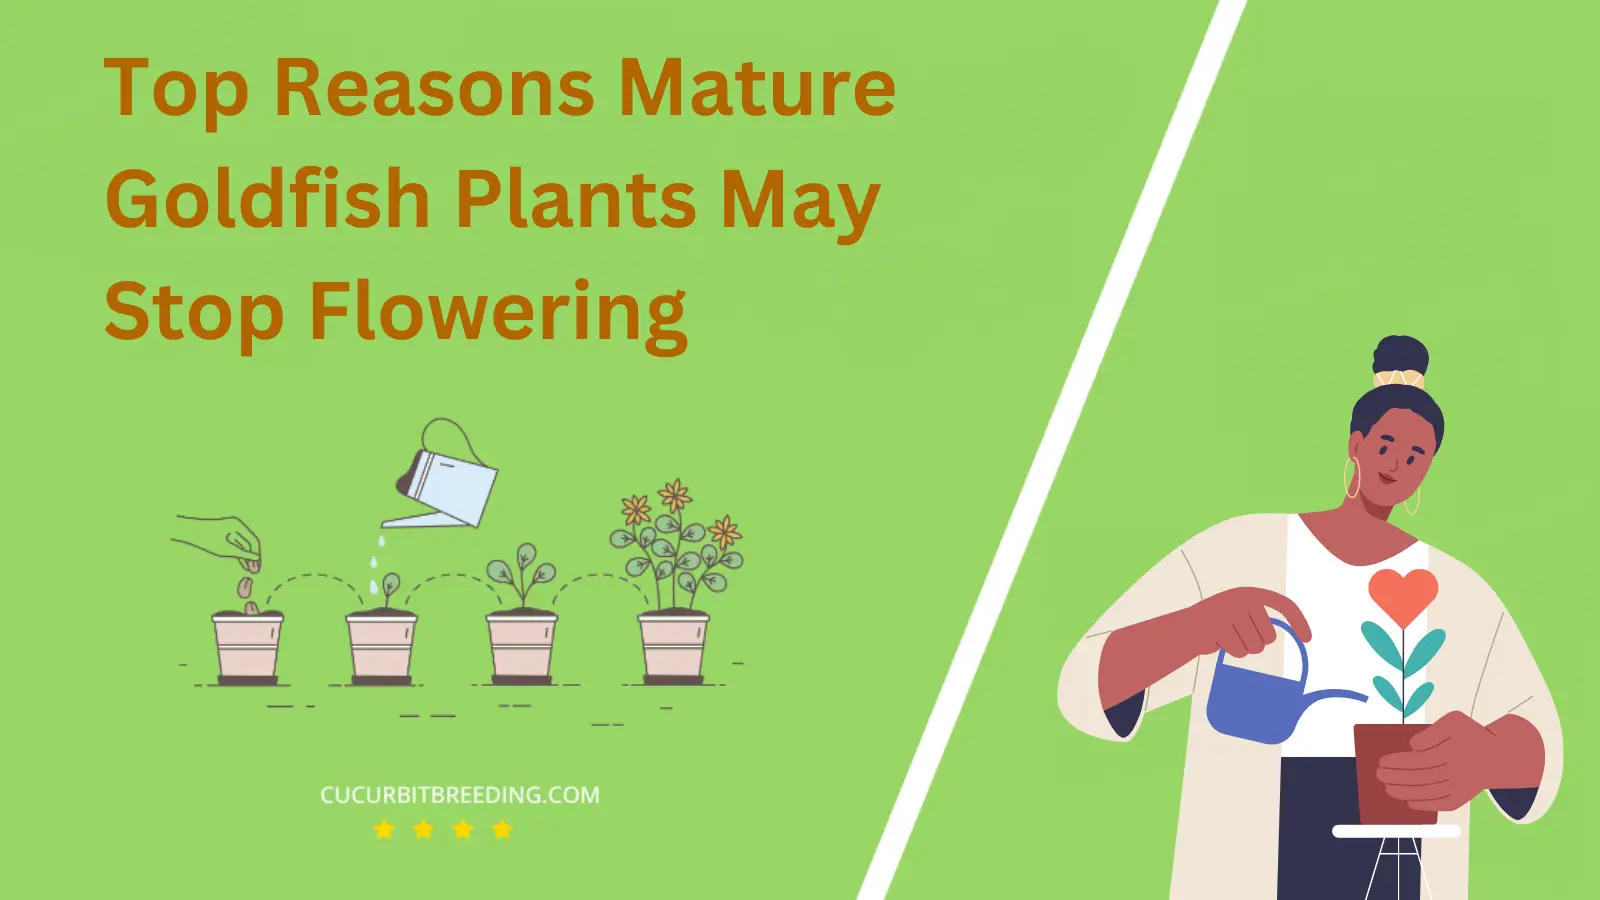 Top Reasons Mature Goldfish Plants May Stop Flowering